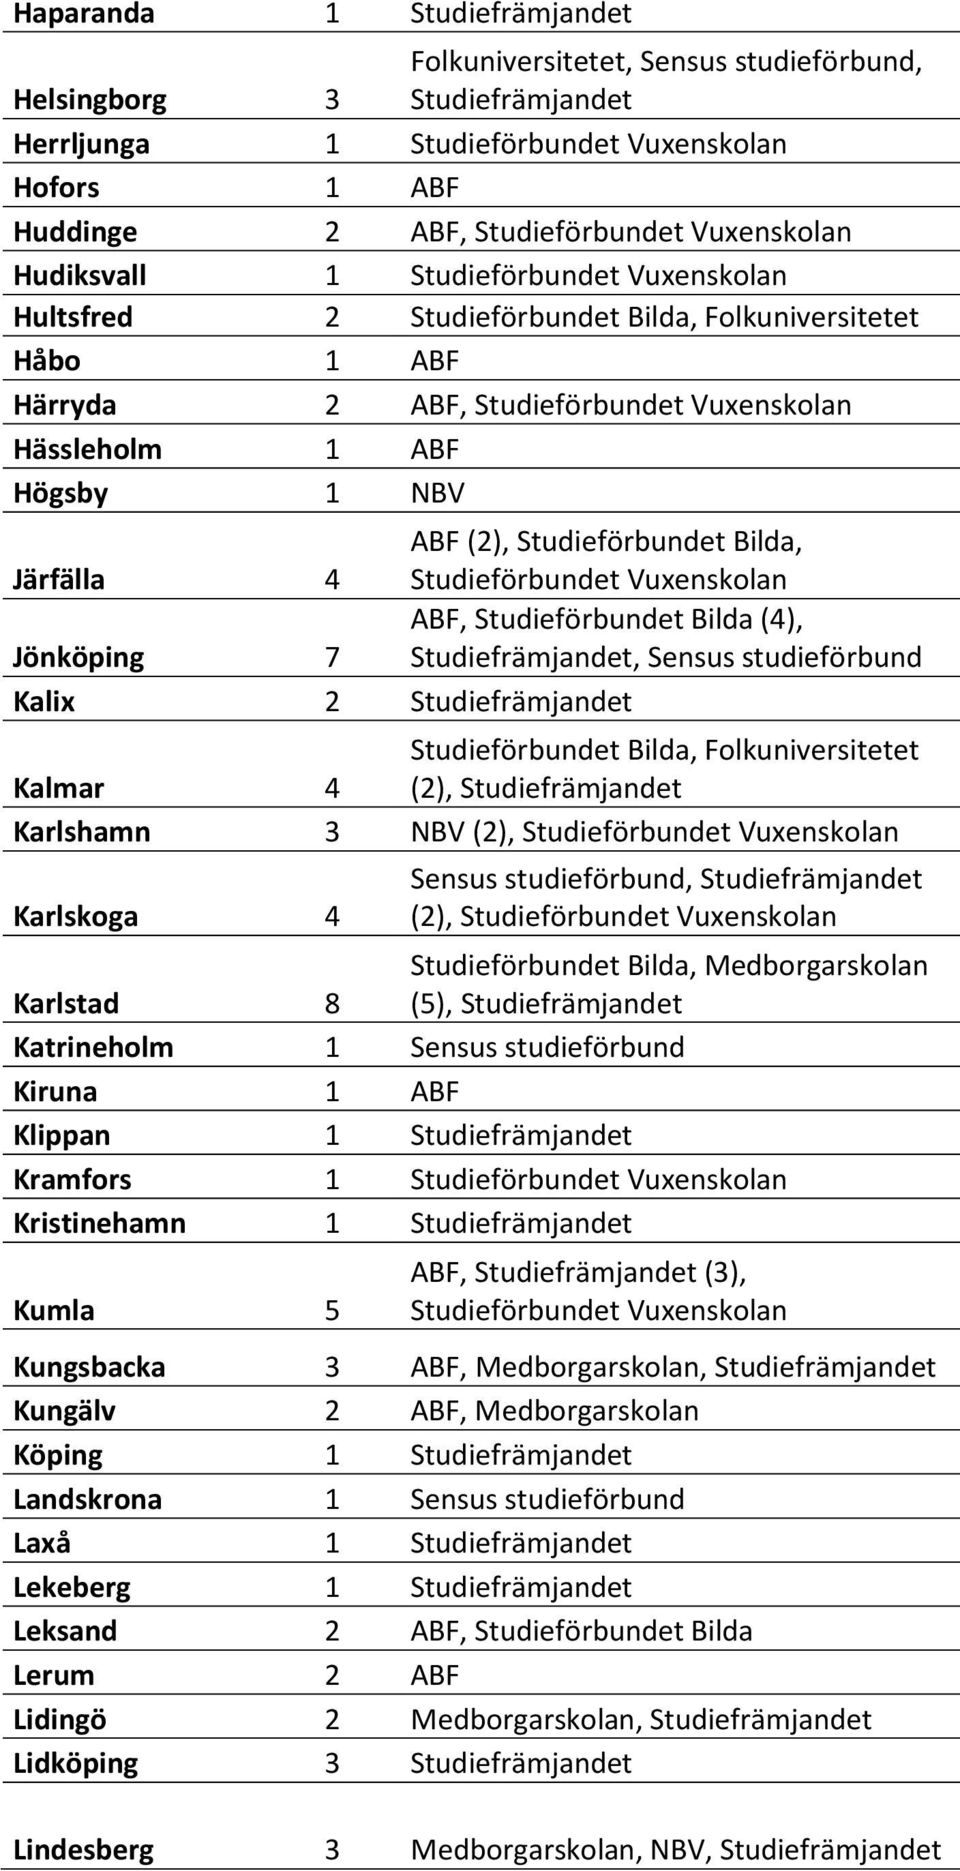 4 (2), Karlshamn 3 NBV (2), Karlskoga 4 Sensus studieförbund, (2), Karlstad 8 Studieförbundet Bilda, Medborgarskolan (5), Katrineholm 1 Sensus studieförbund Kiruna 1 ABF Klippan 1 Kramfors 1